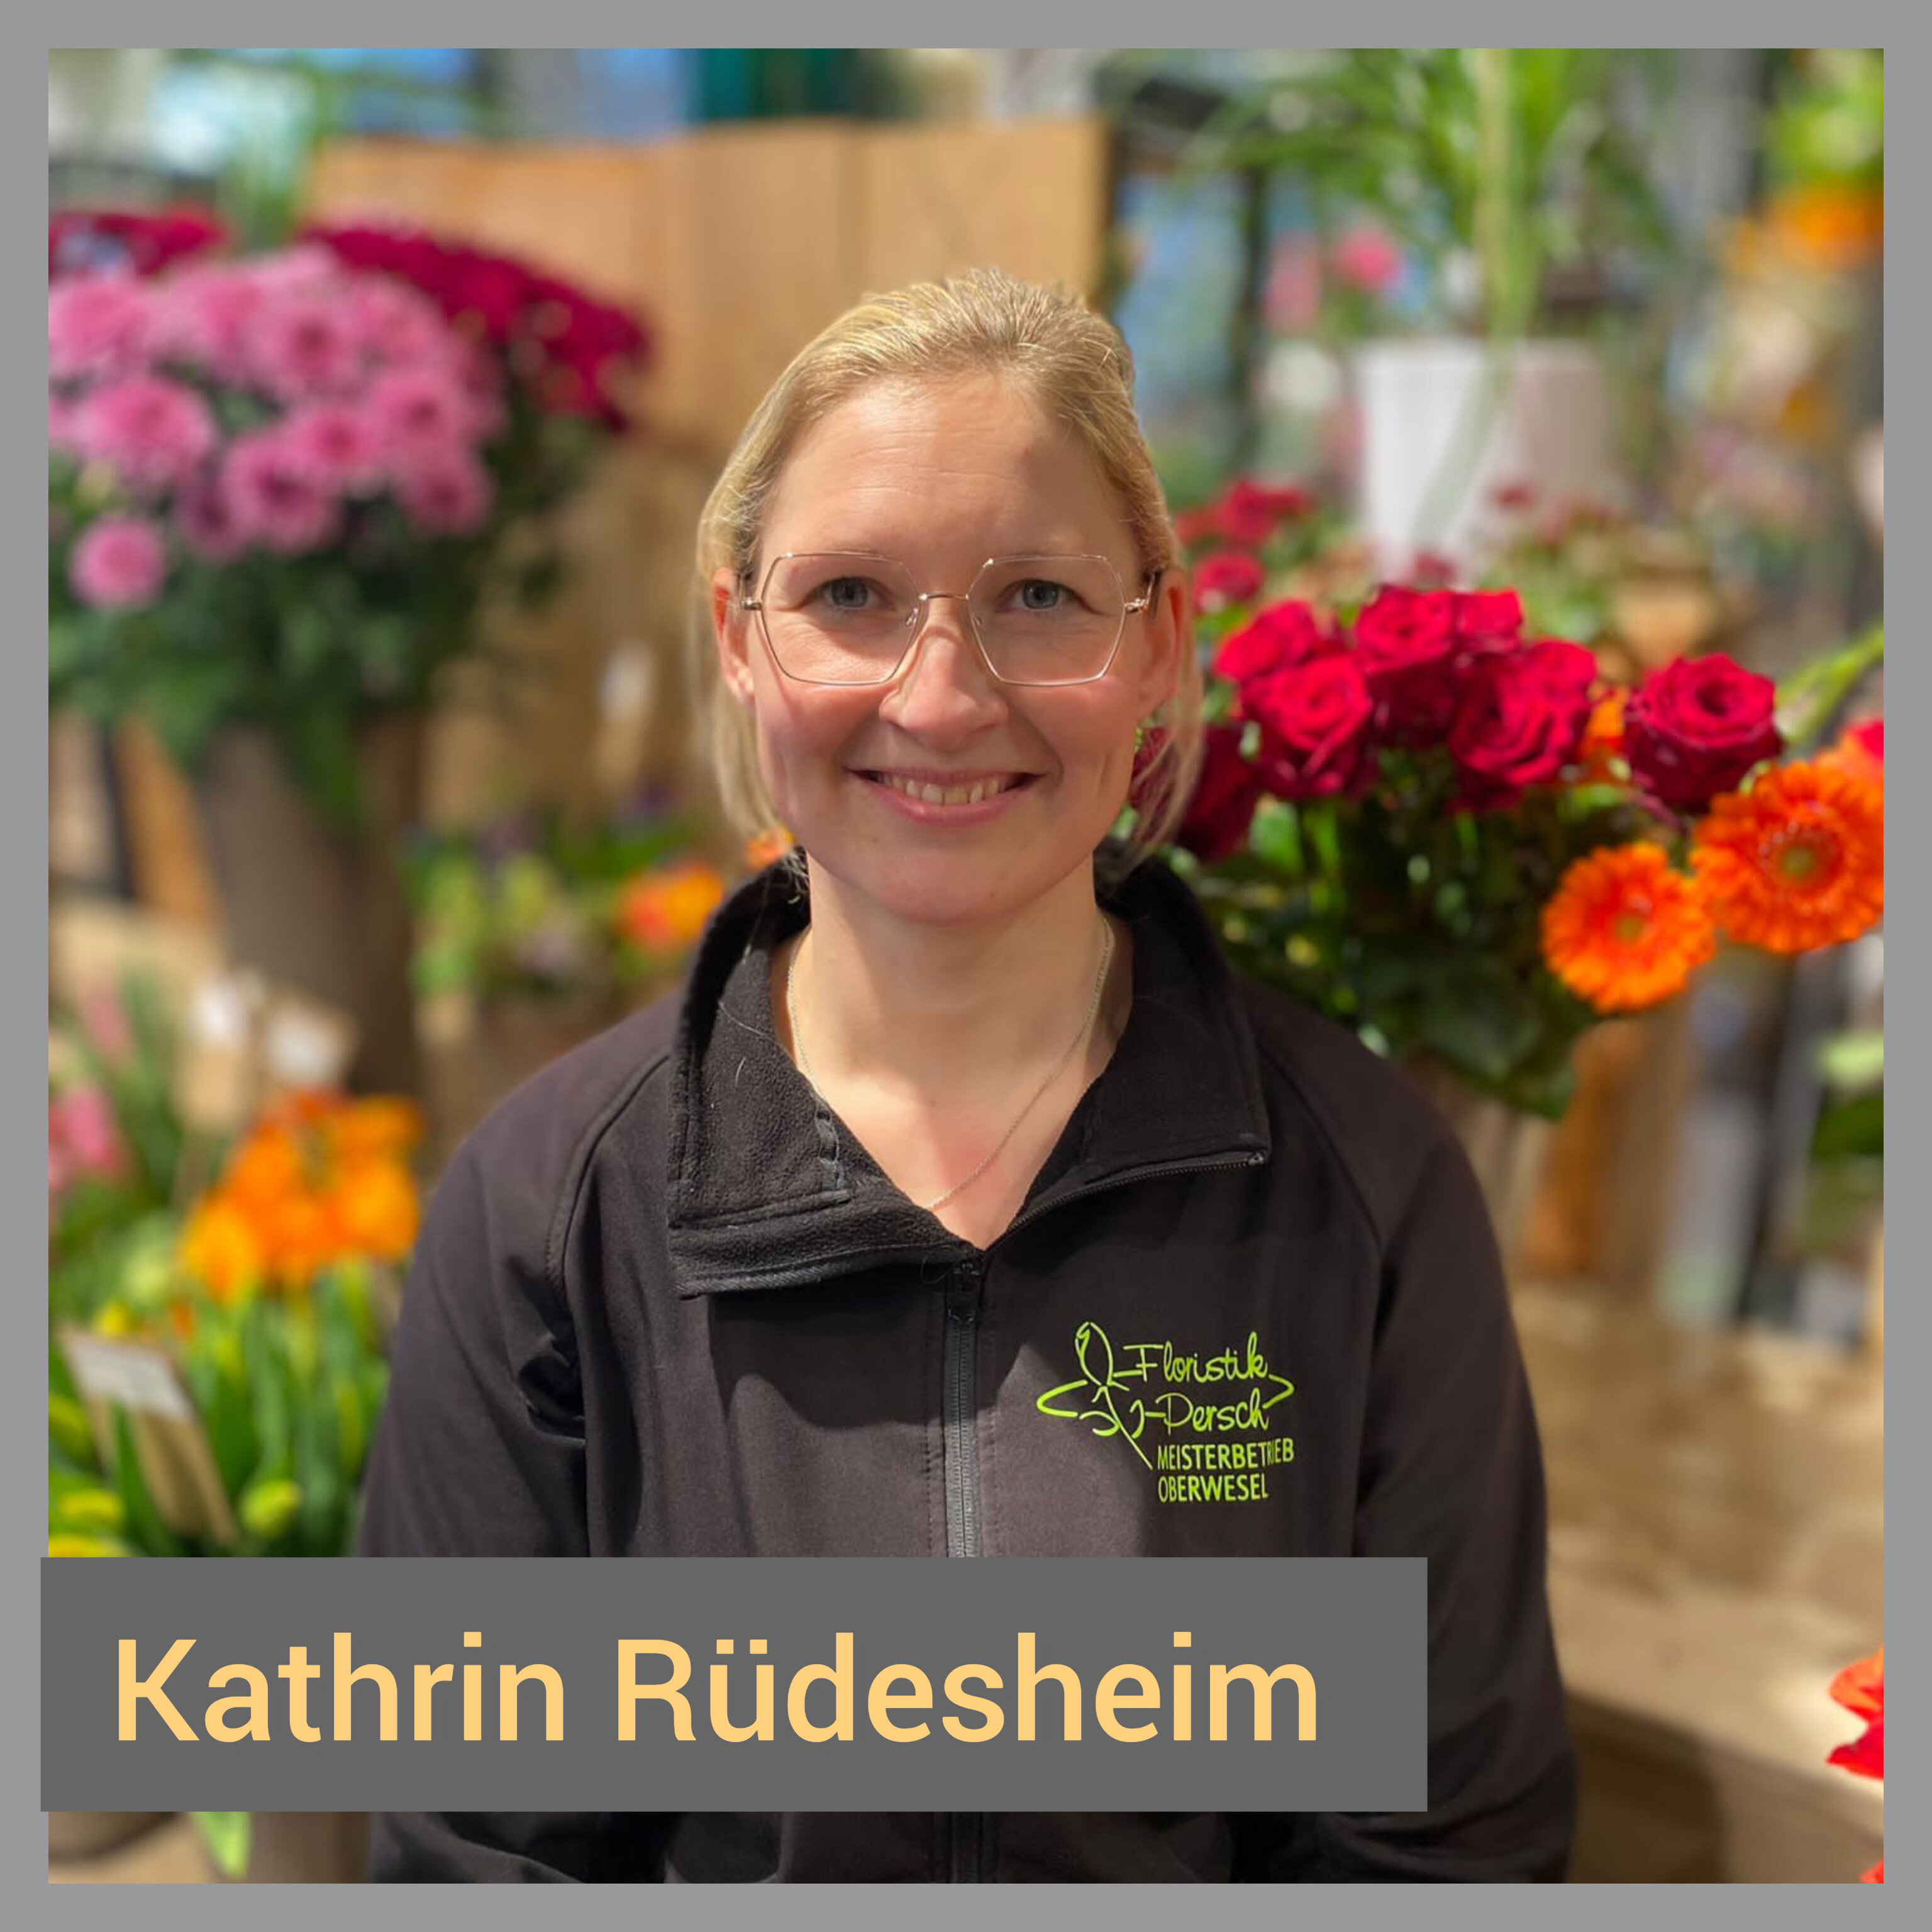 Kathrin Rüdesheim